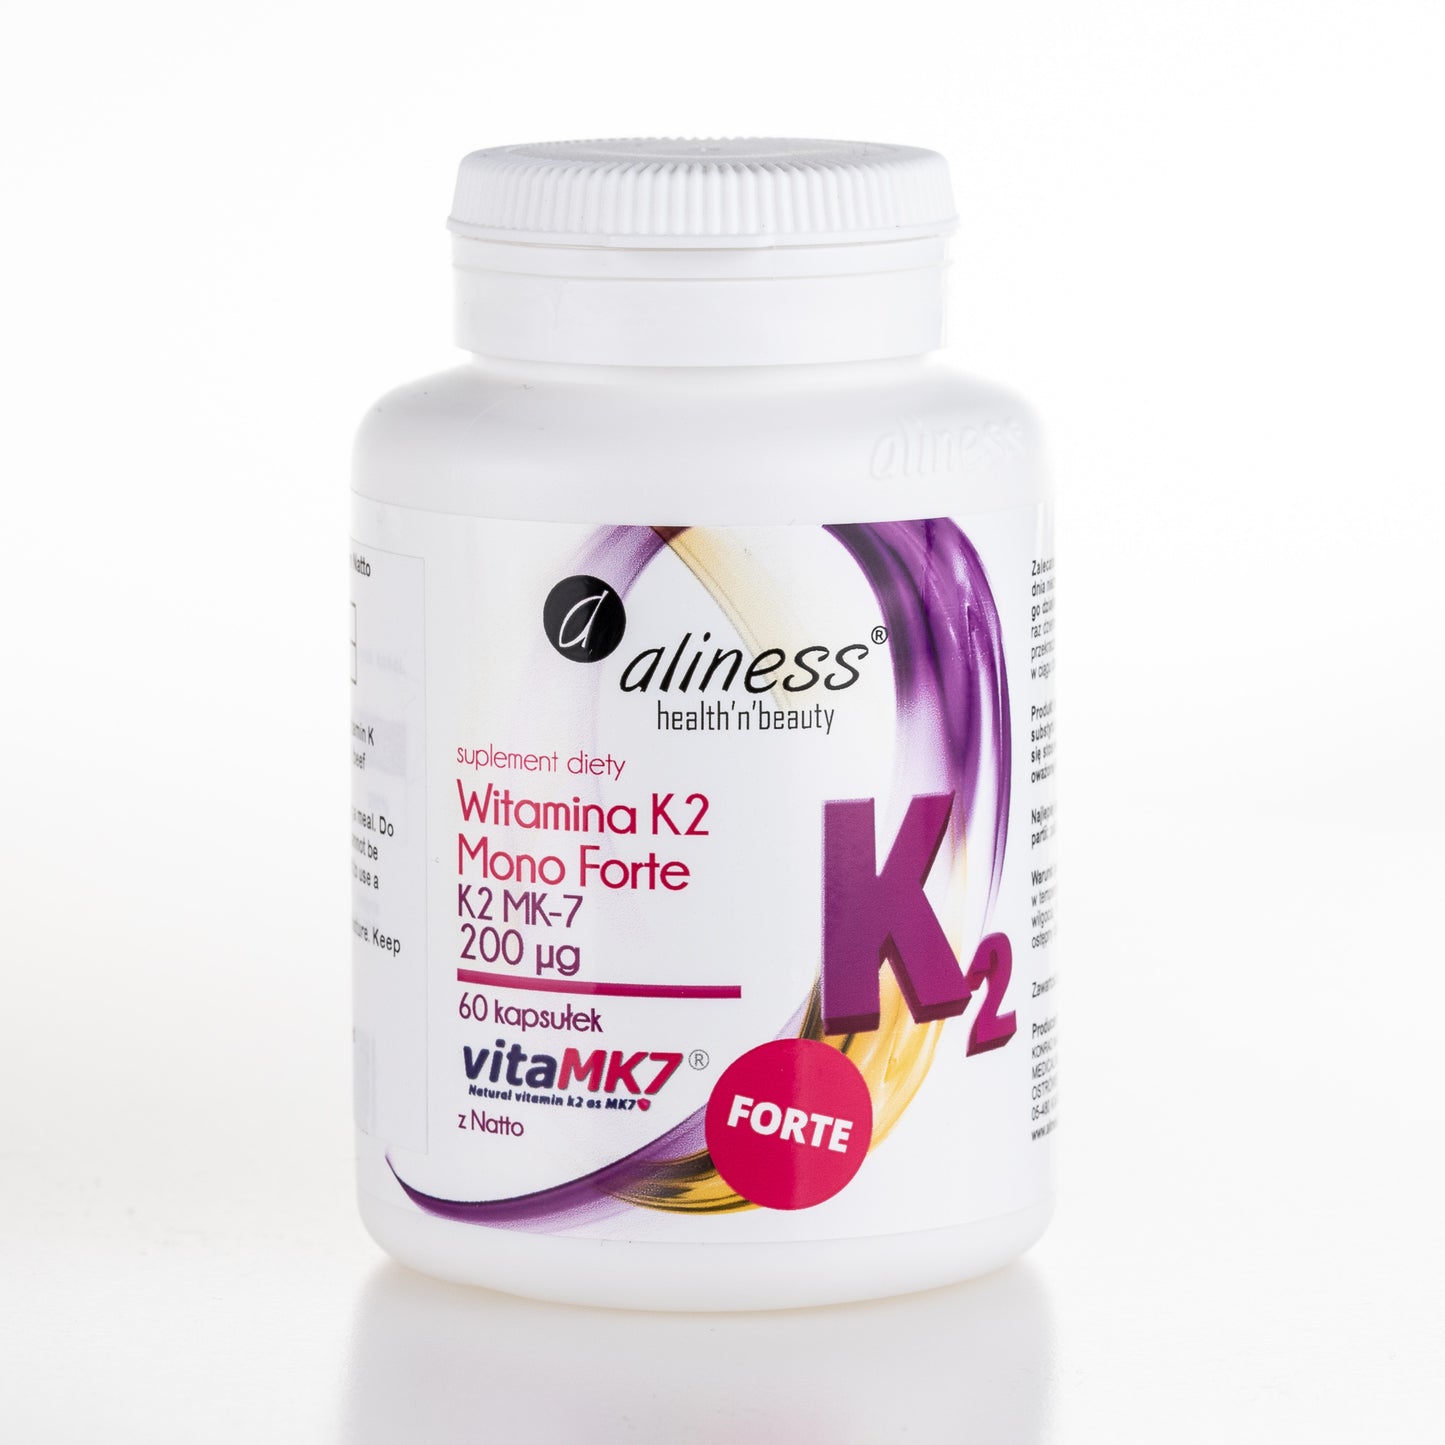 Vitamin K2 MK-7 FORTE 200mcg (200μg) from Natto, 60 capsules, 2 months supply